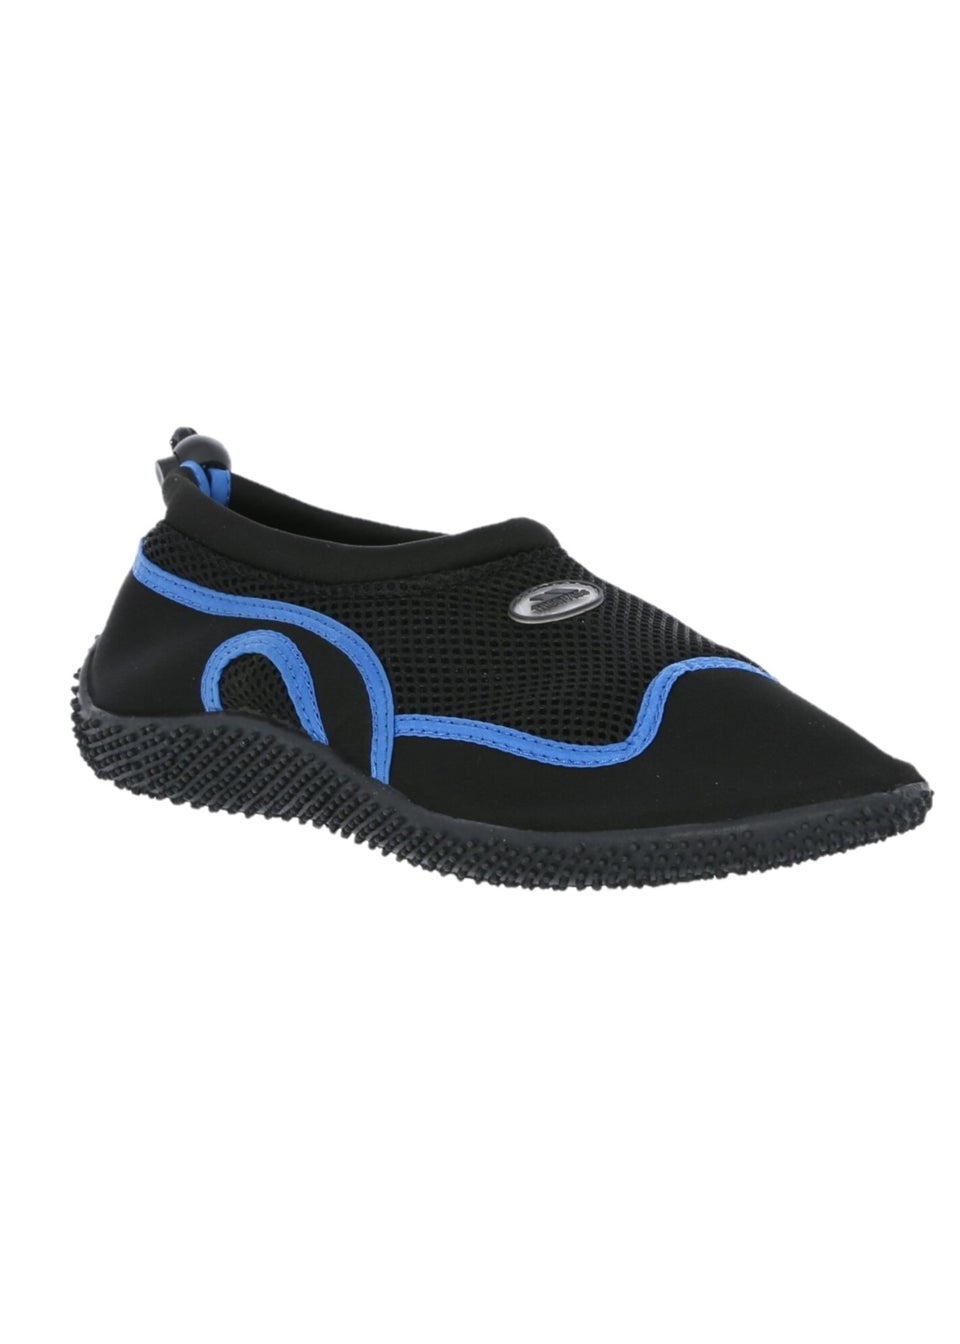 Trespass Black/Blue Adults Paddle Aqua Swimming Shoe